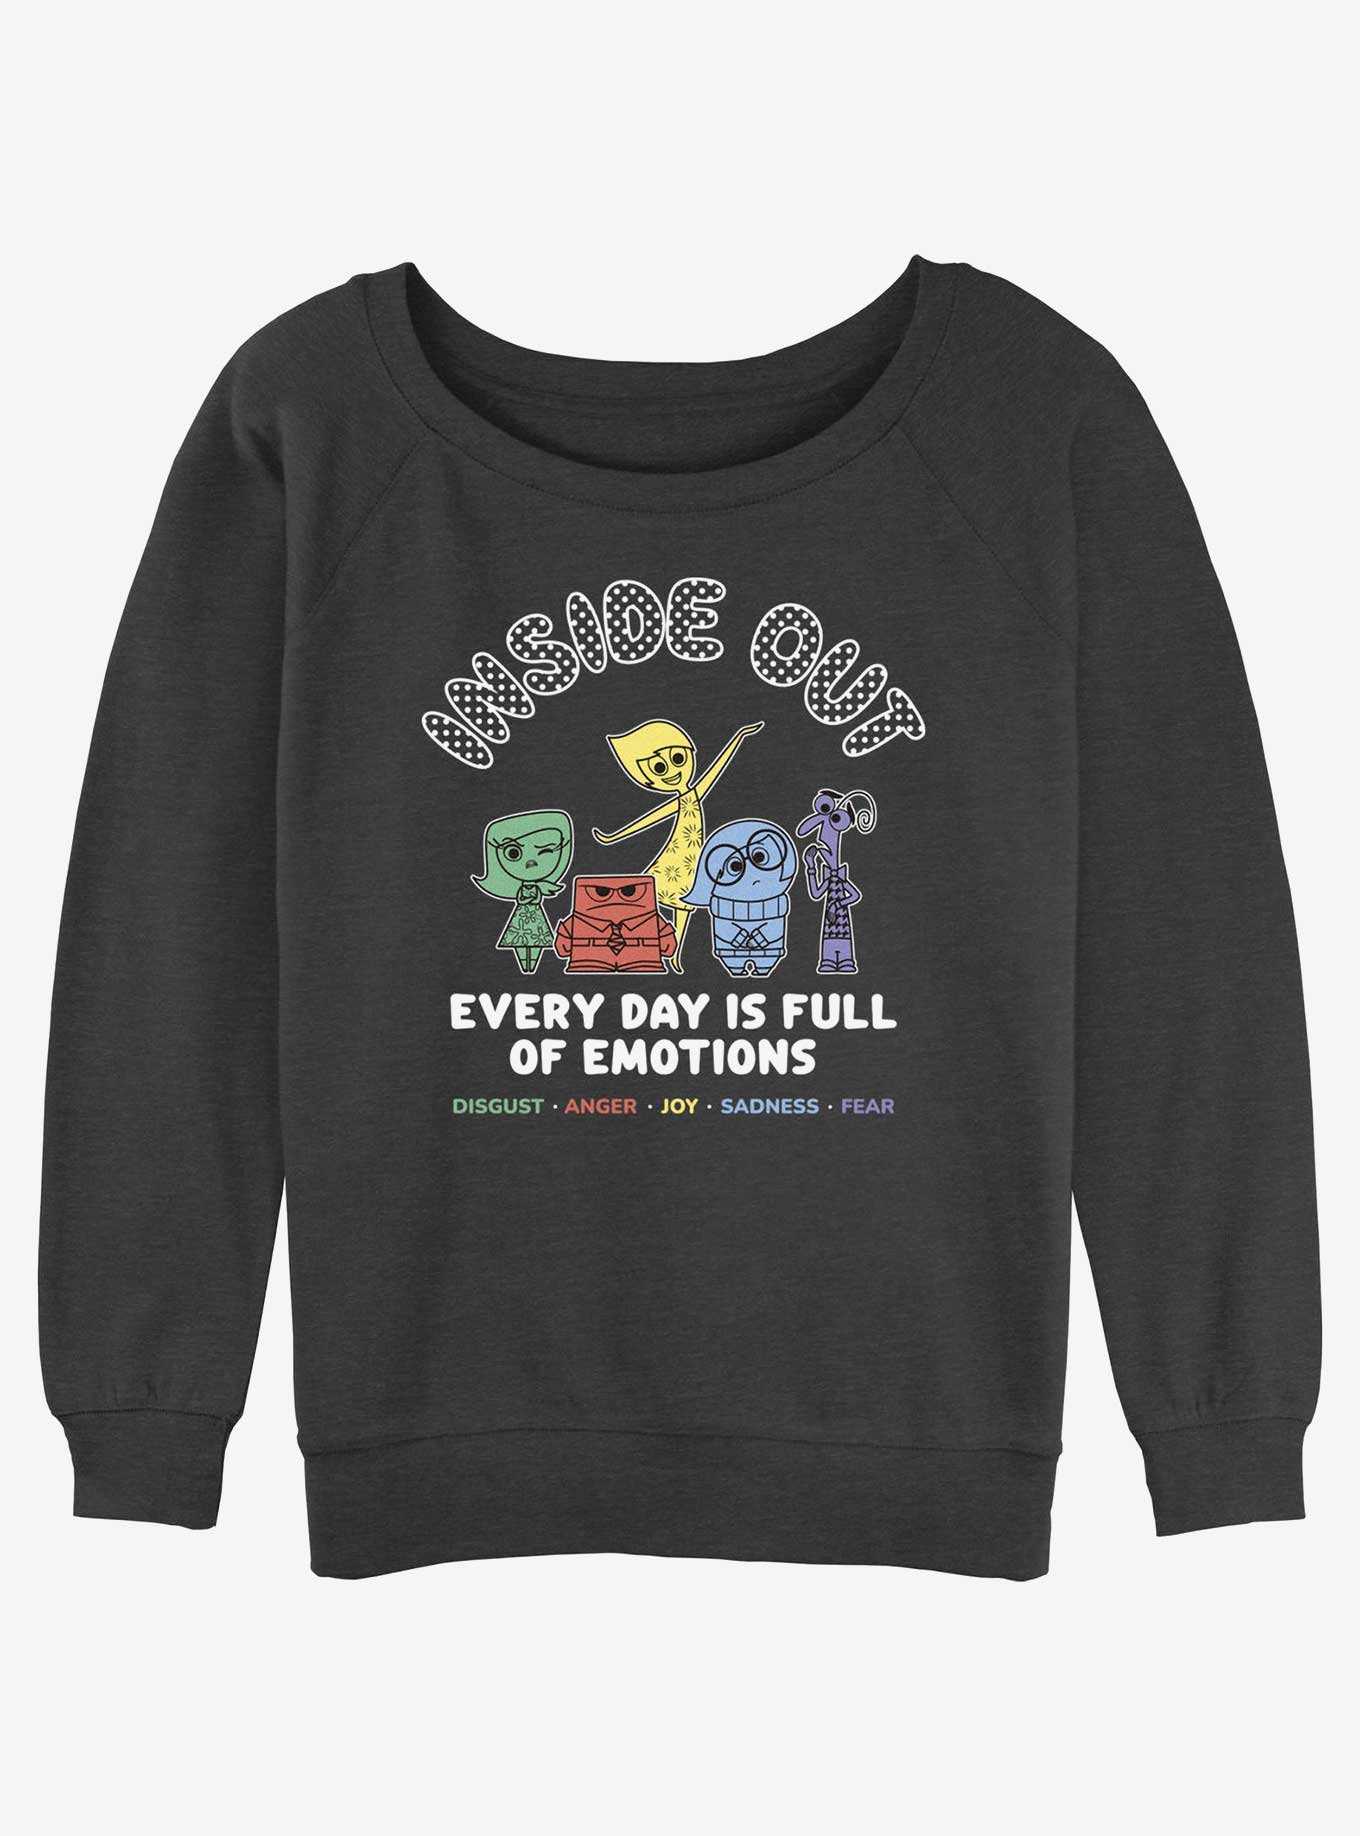 Disney Pixar Inside Out 2 Every Day Emotions Girls Slouchy Sweatshirt, , hi-res